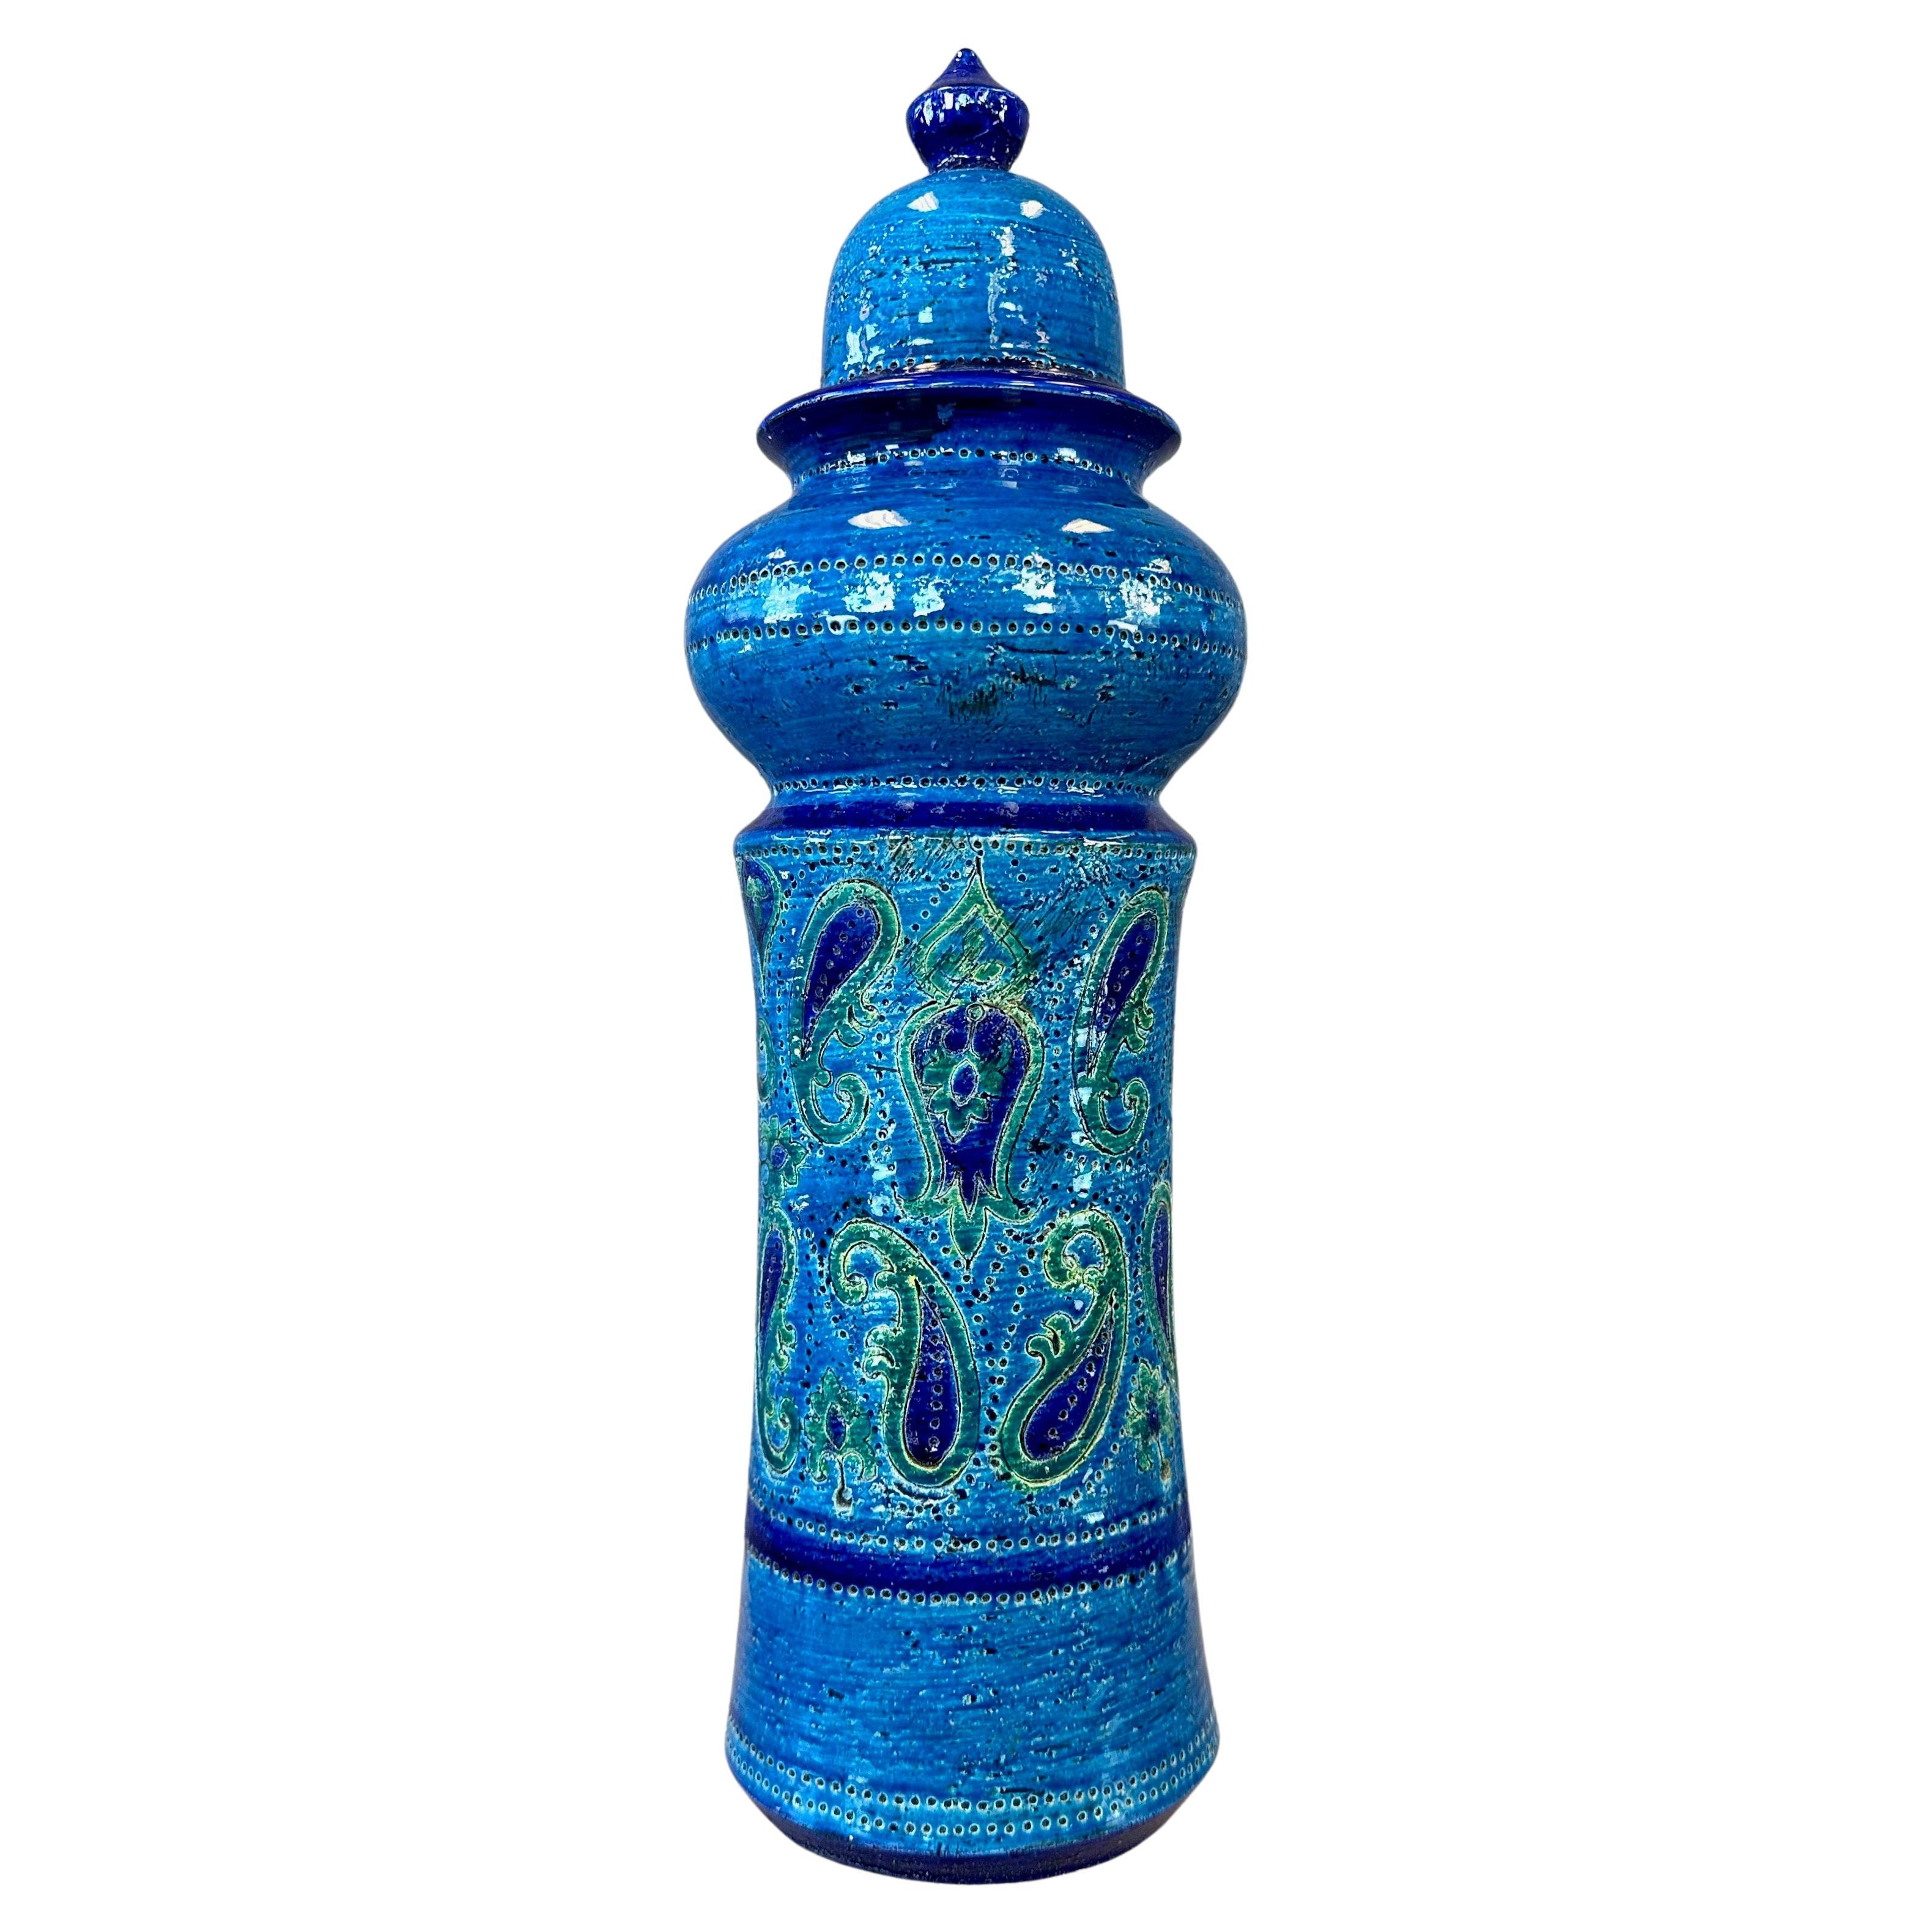 Aldo Londi for Bitossi Rimini Blue Tall Lidded Jar, 1960s For Sale